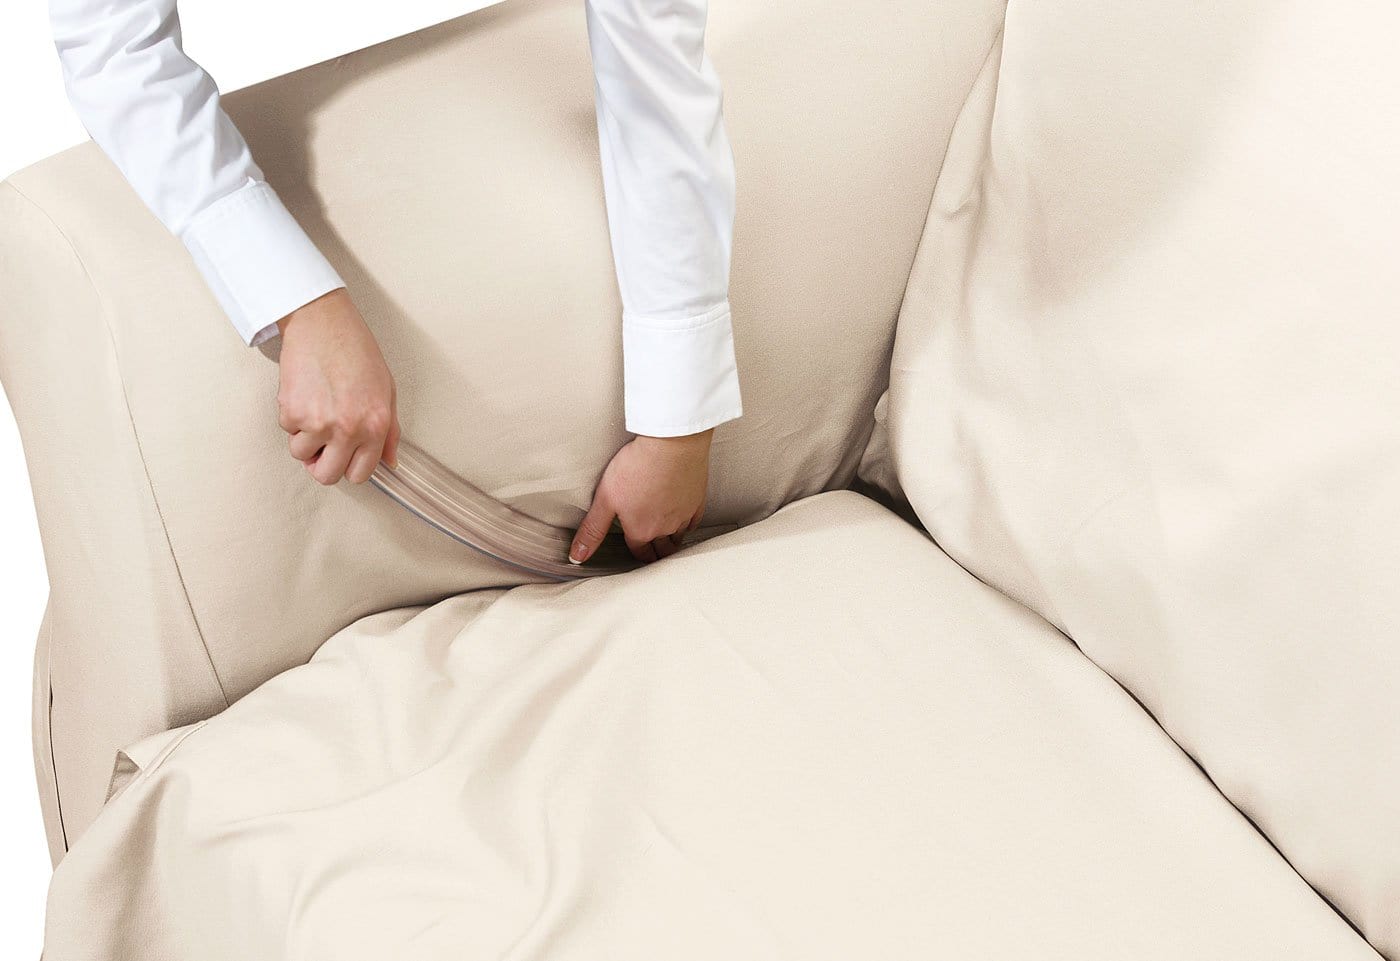 Clear PVC SureFit Sofa Slipcover Grip Strips Tuck Tight